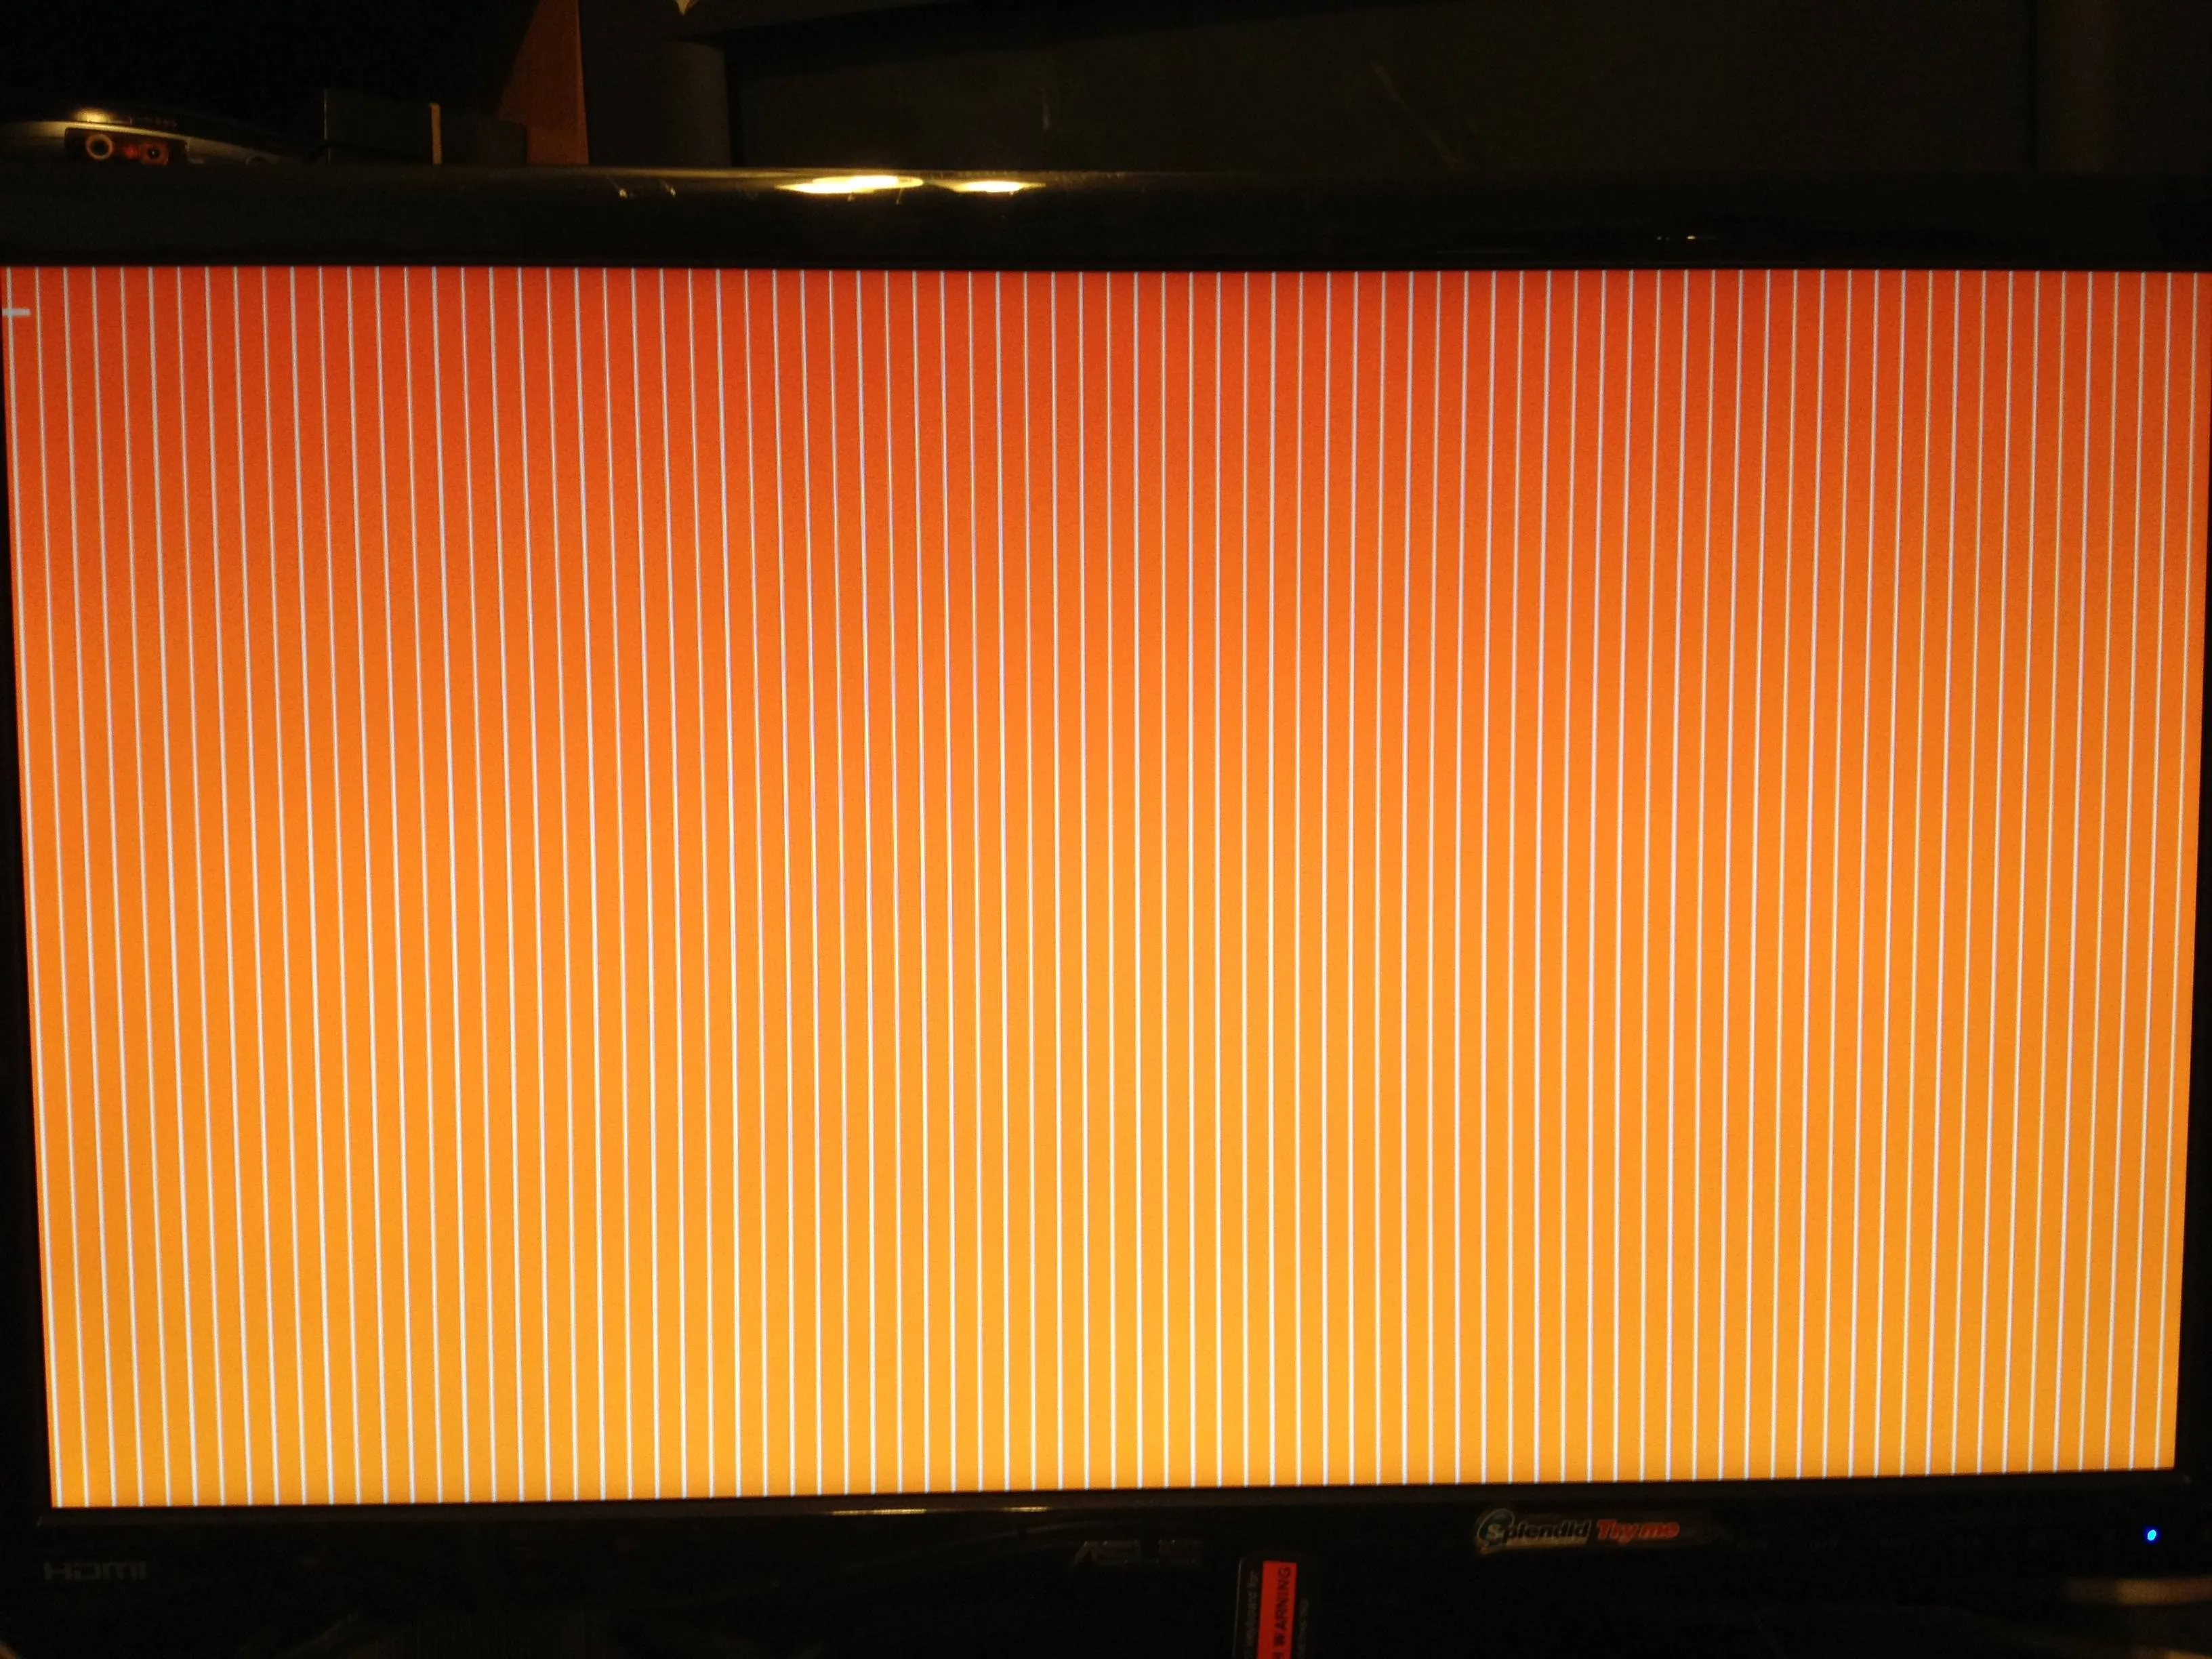 Желтый край экран. Оранжевый экран виндовс 10. Оранжевый экран с белыми полосами при установке виндовс 10. Оранжевые полосы на экране. Оранжевый экран с белыми полосками.